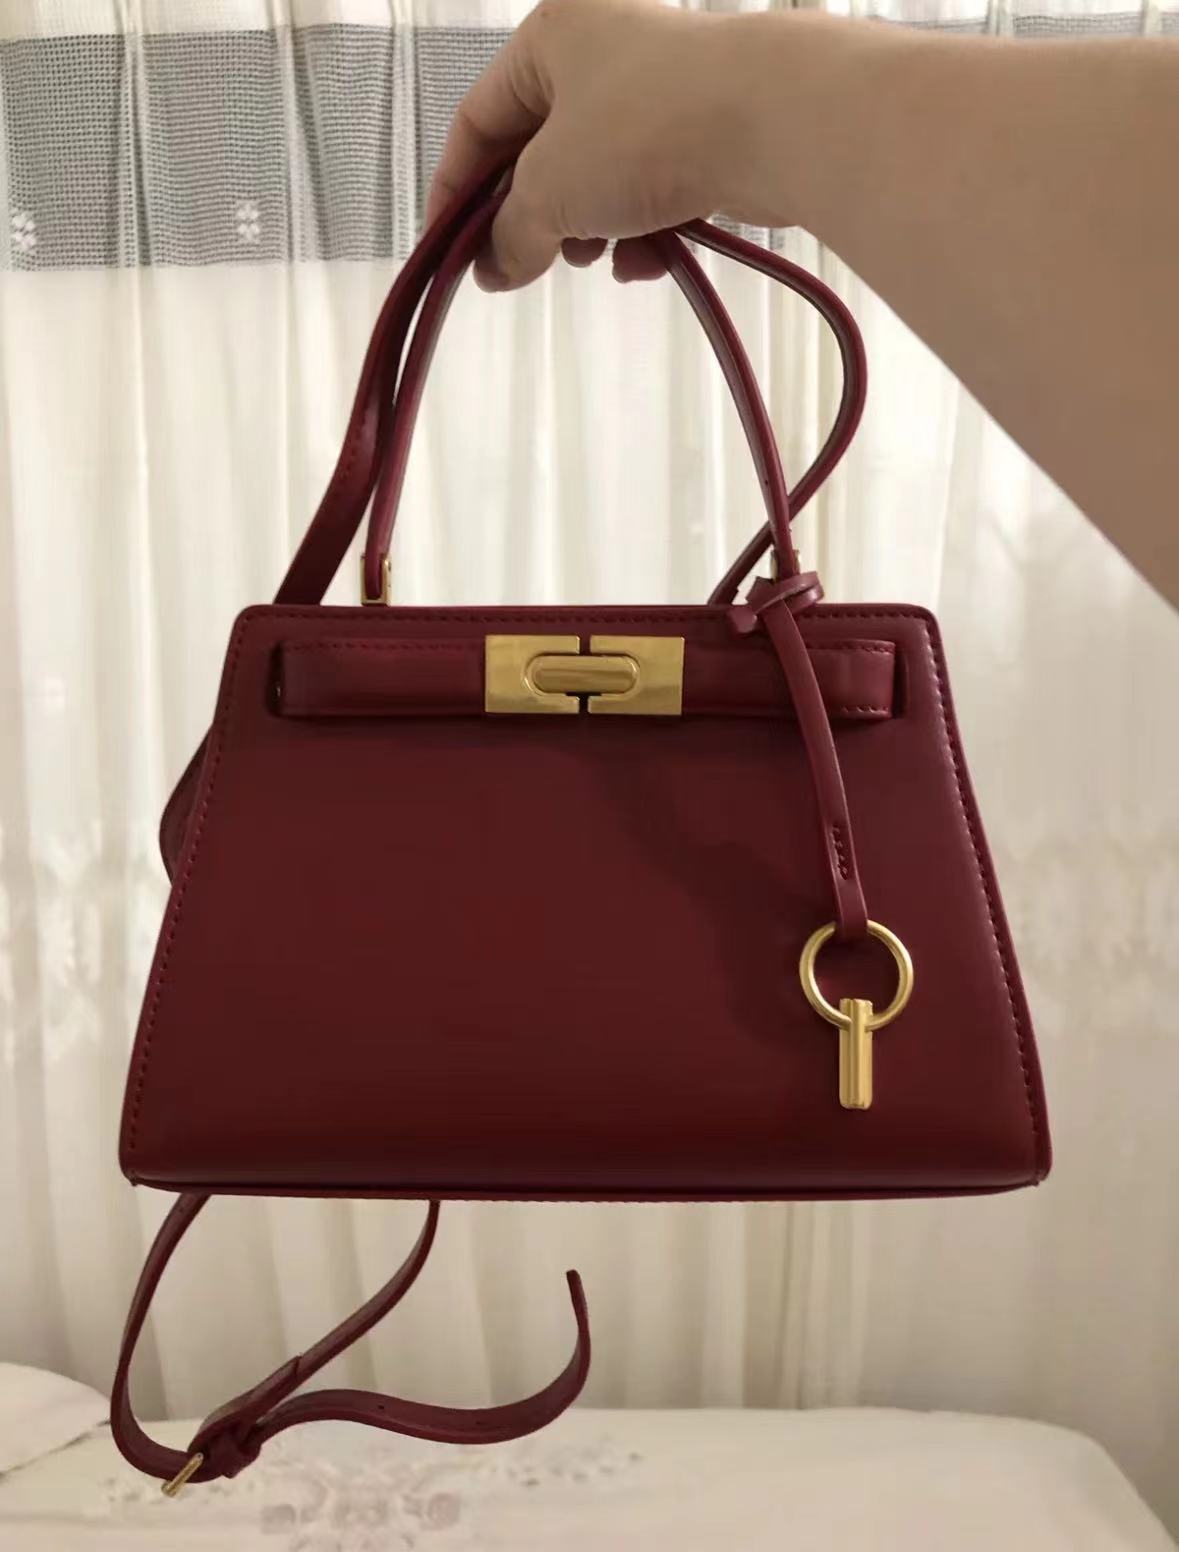 Women's Minimal Top Handle Handbags with Shoulder Strap photo review